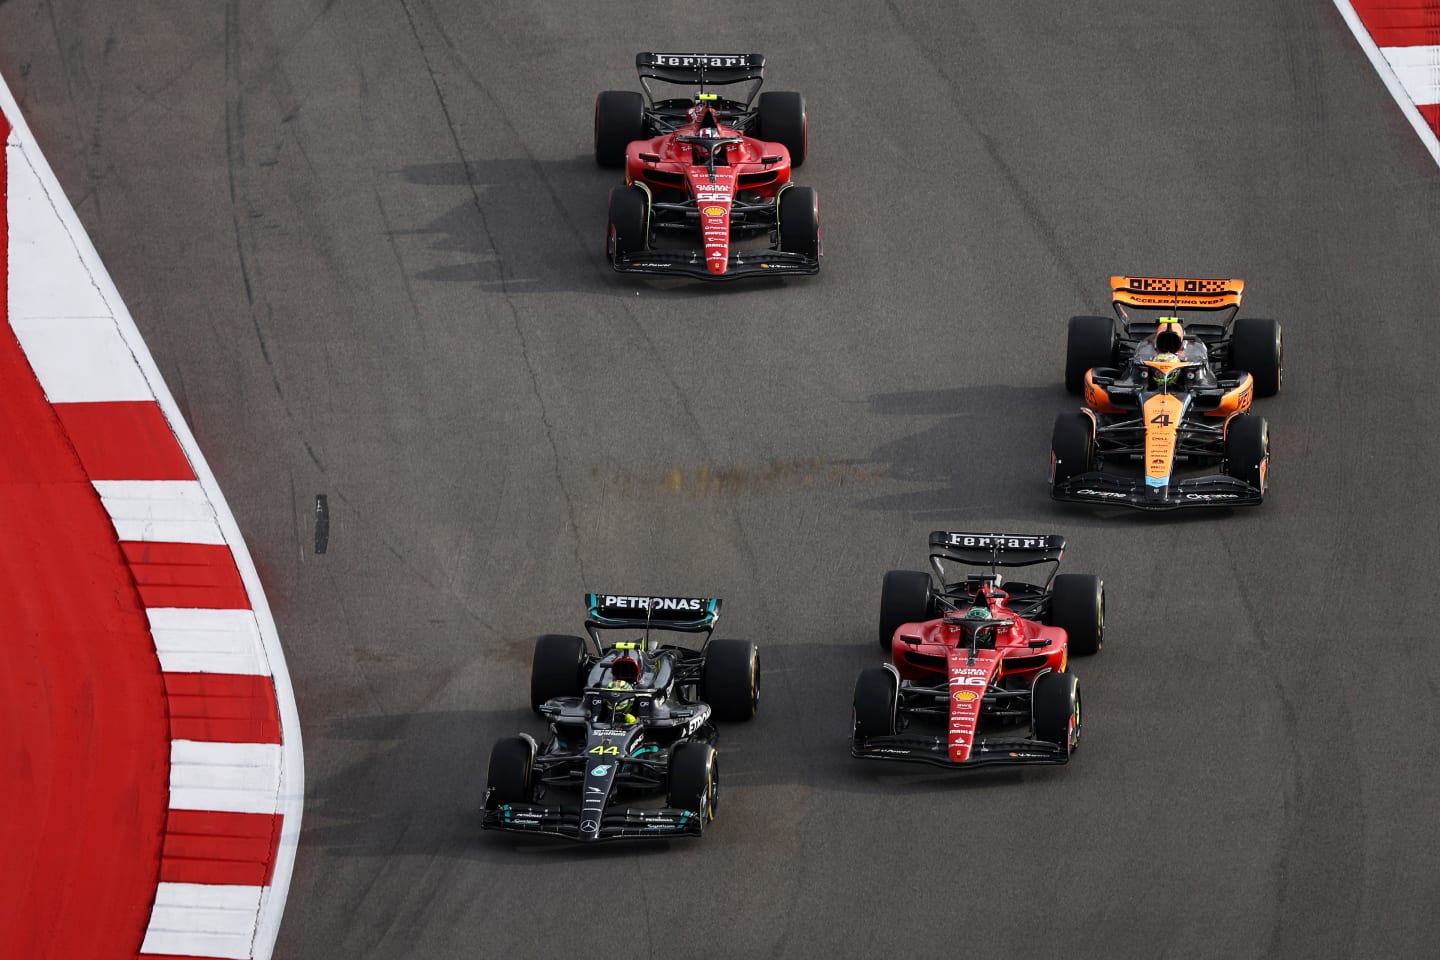 AUSTIN, TEXAS - OCTOBER 21: Lewis Hamilton of Great Britain driving the (44) Mercedes AMG Petronas